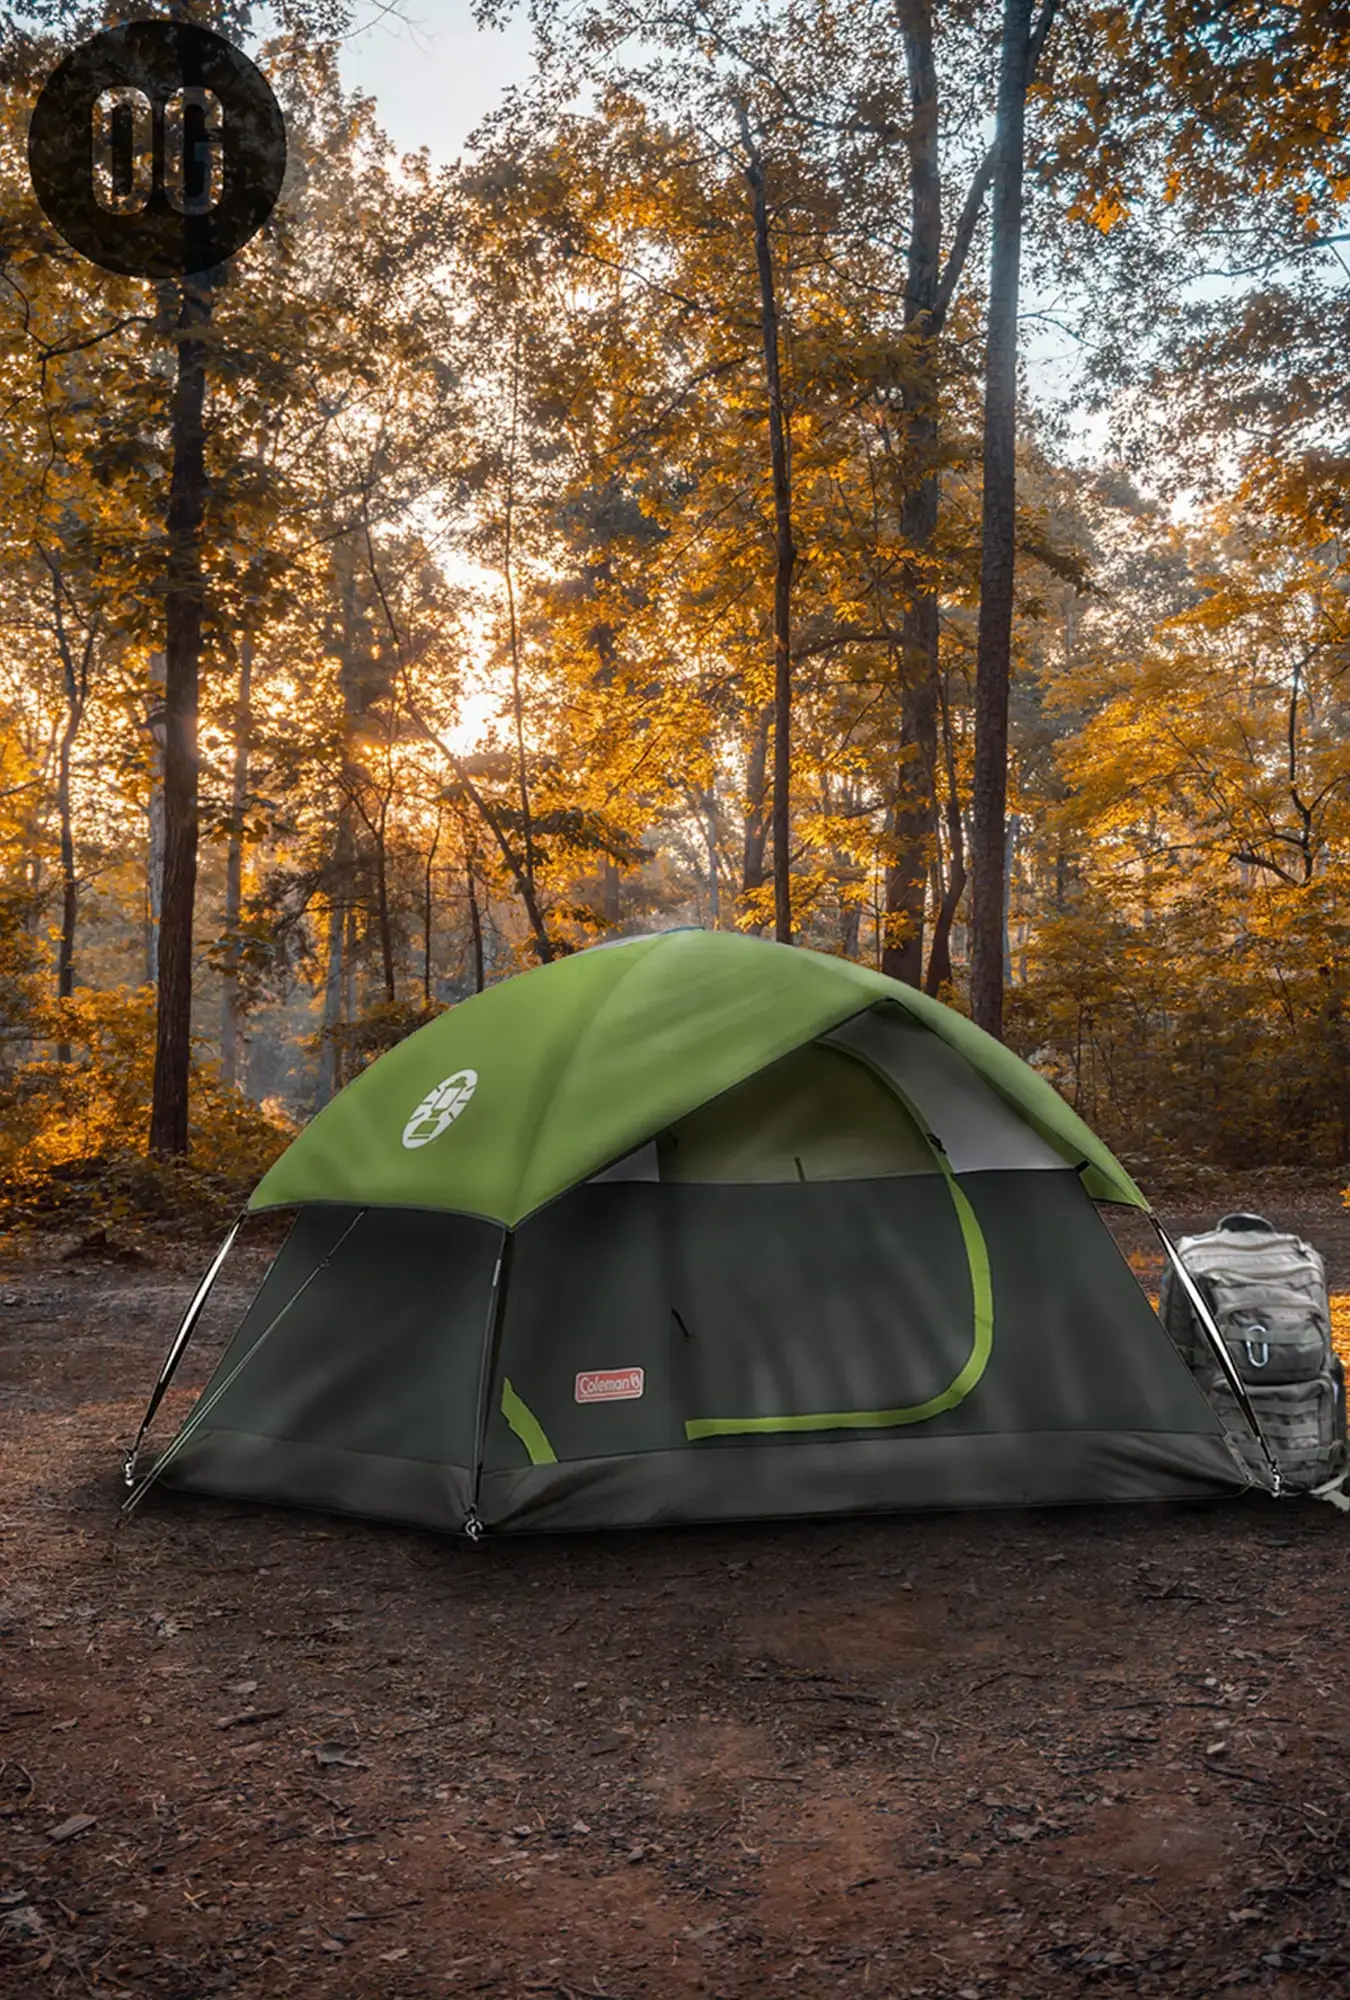 Coleman Sundome 4-Person Camping Dome Tent